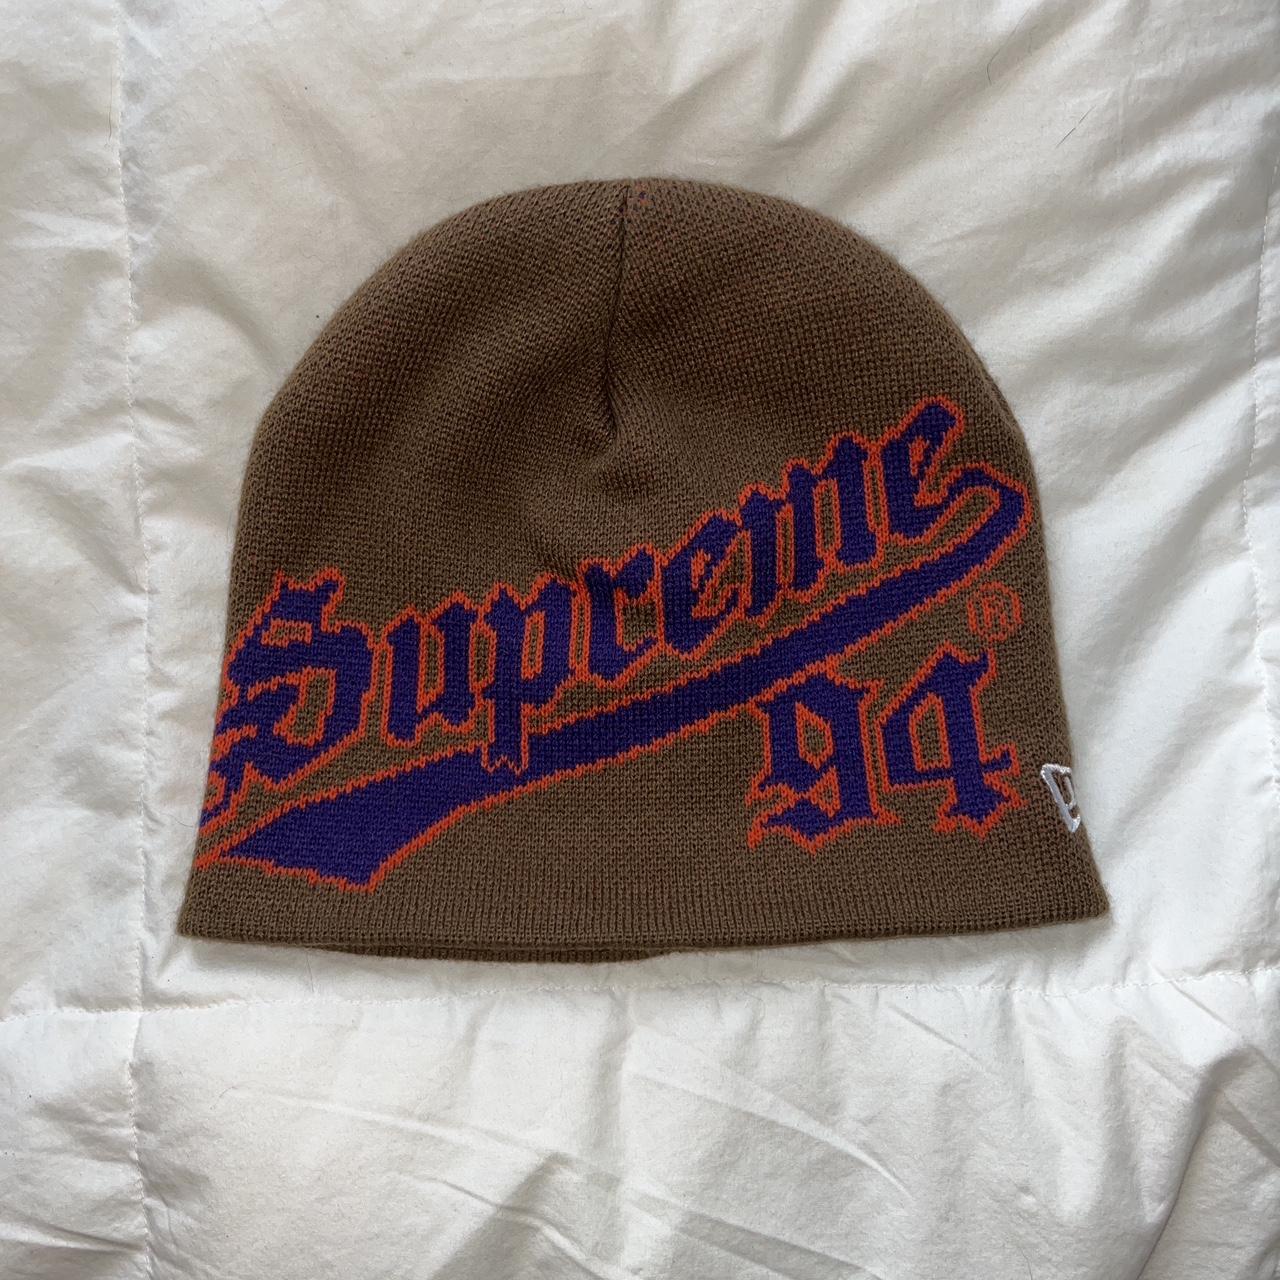 Supreme New Era S logo beanie has been worn a good - Depop